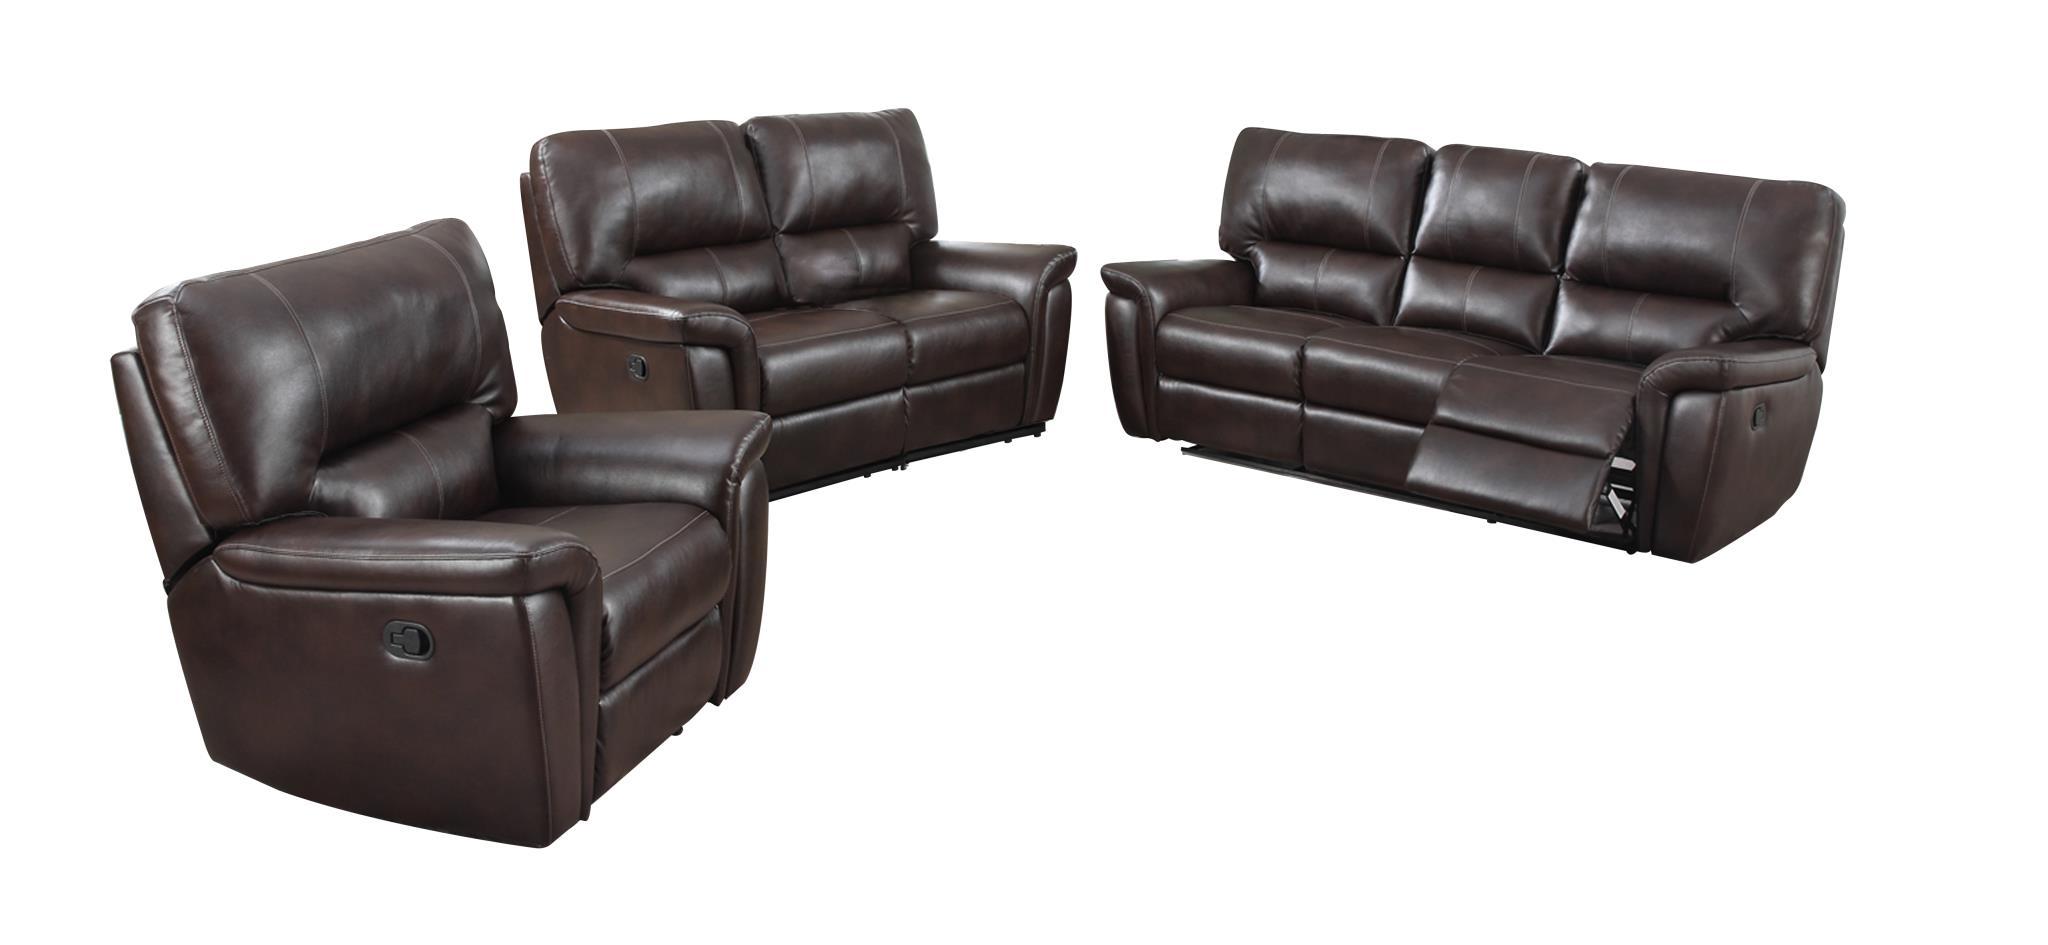 

    
MYCO Furniture Galaxy Burgundy Leather Air Reclining Power Sofa Set 3Pcs Modern
